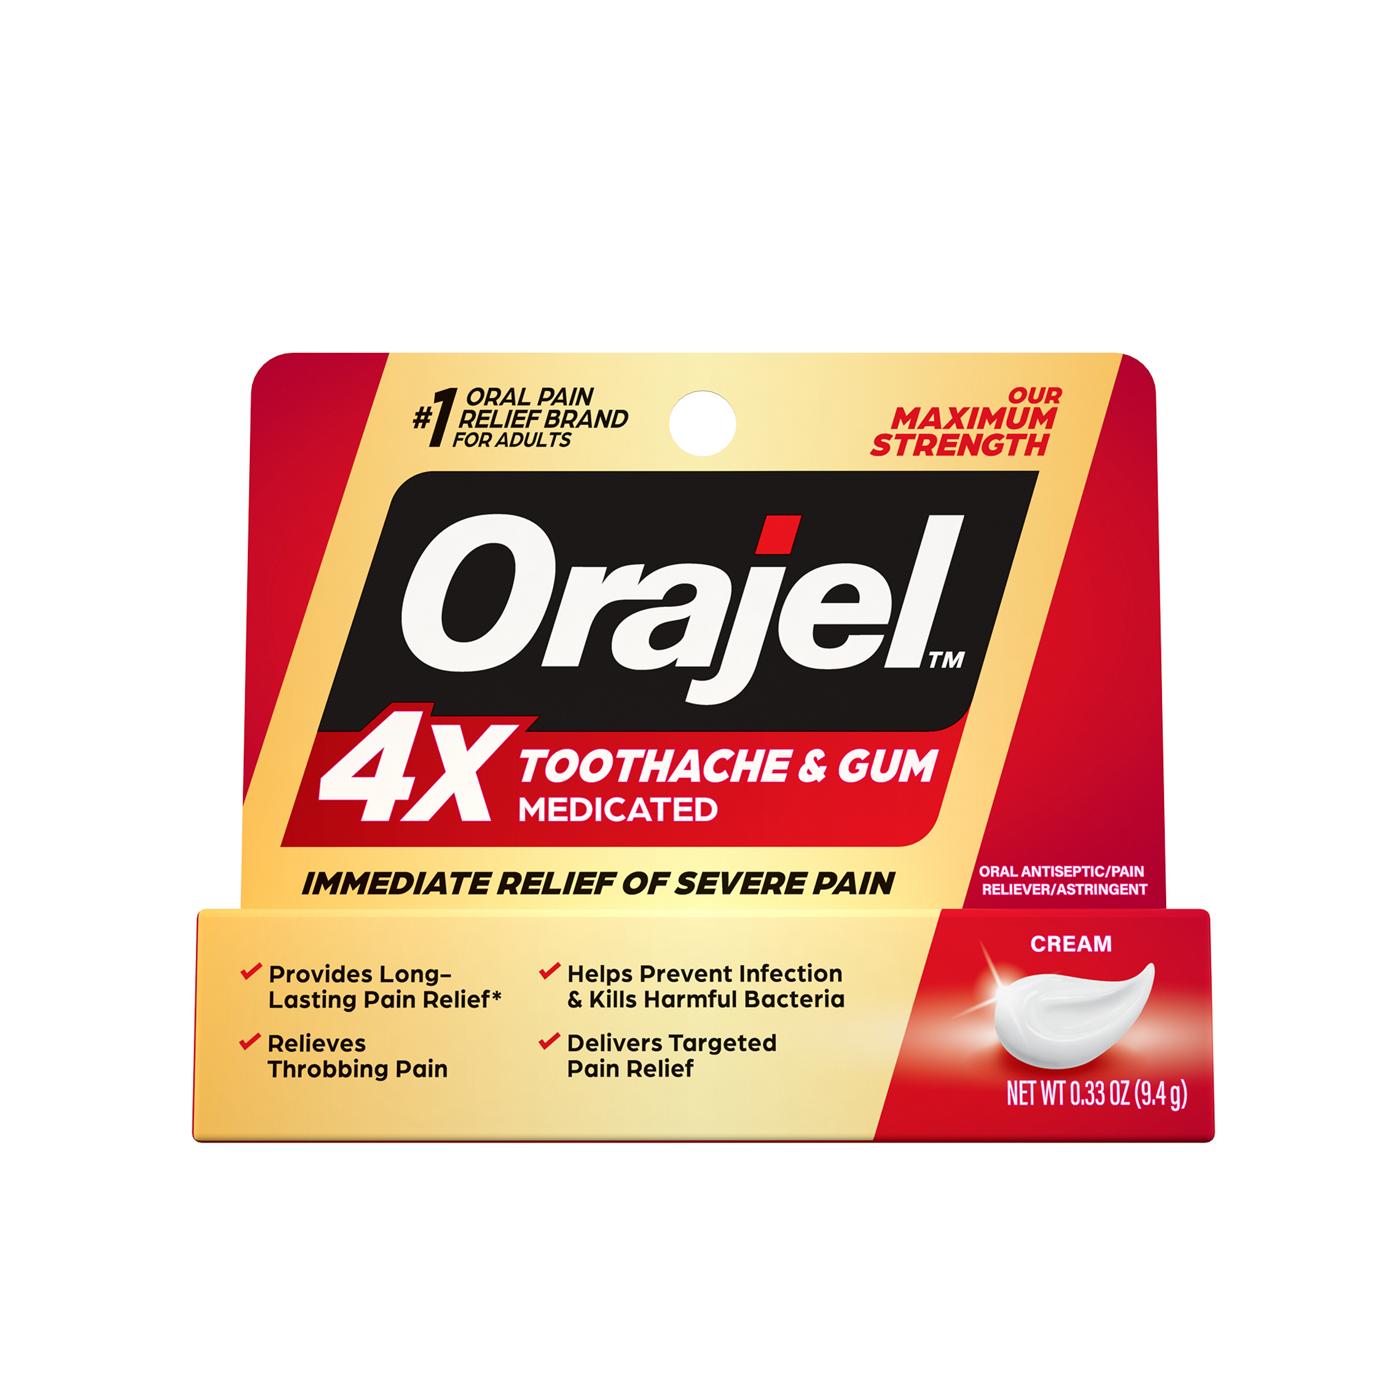 Orajel 4x Medicated Toothache & Gum Instant Pain Relief Cream; image 1 of 2